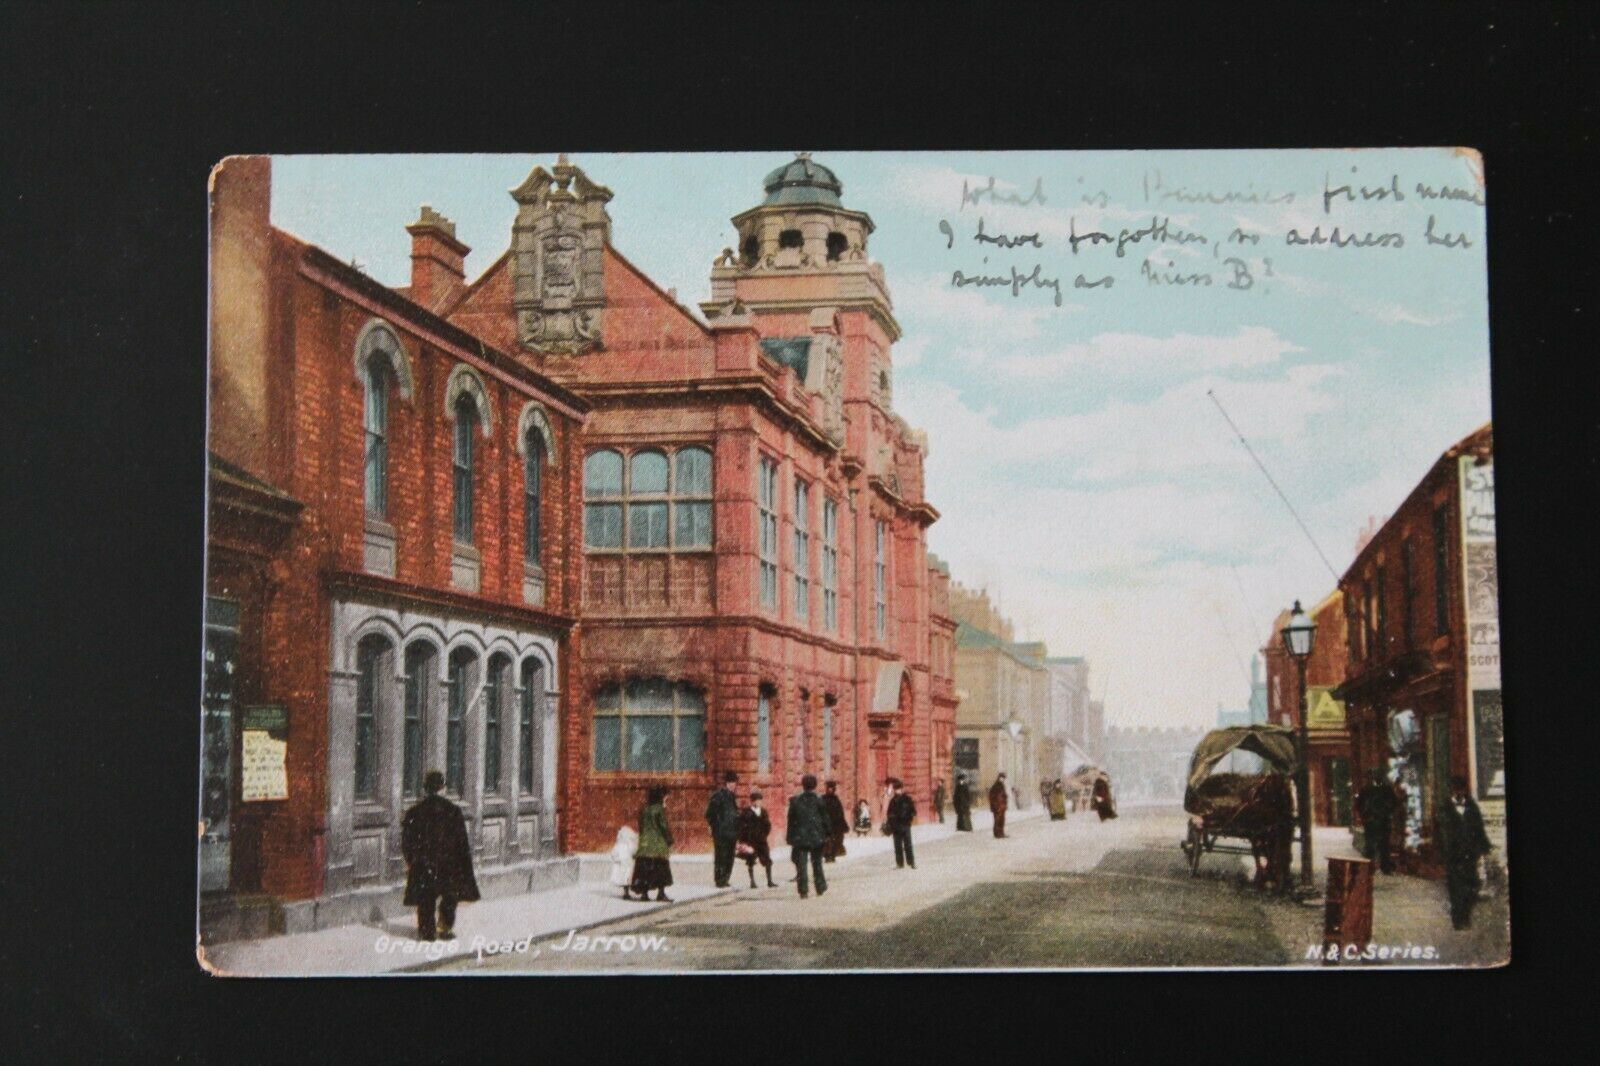 House Clearance - N & C Series - Grange Road, Jarrow - posted 1905